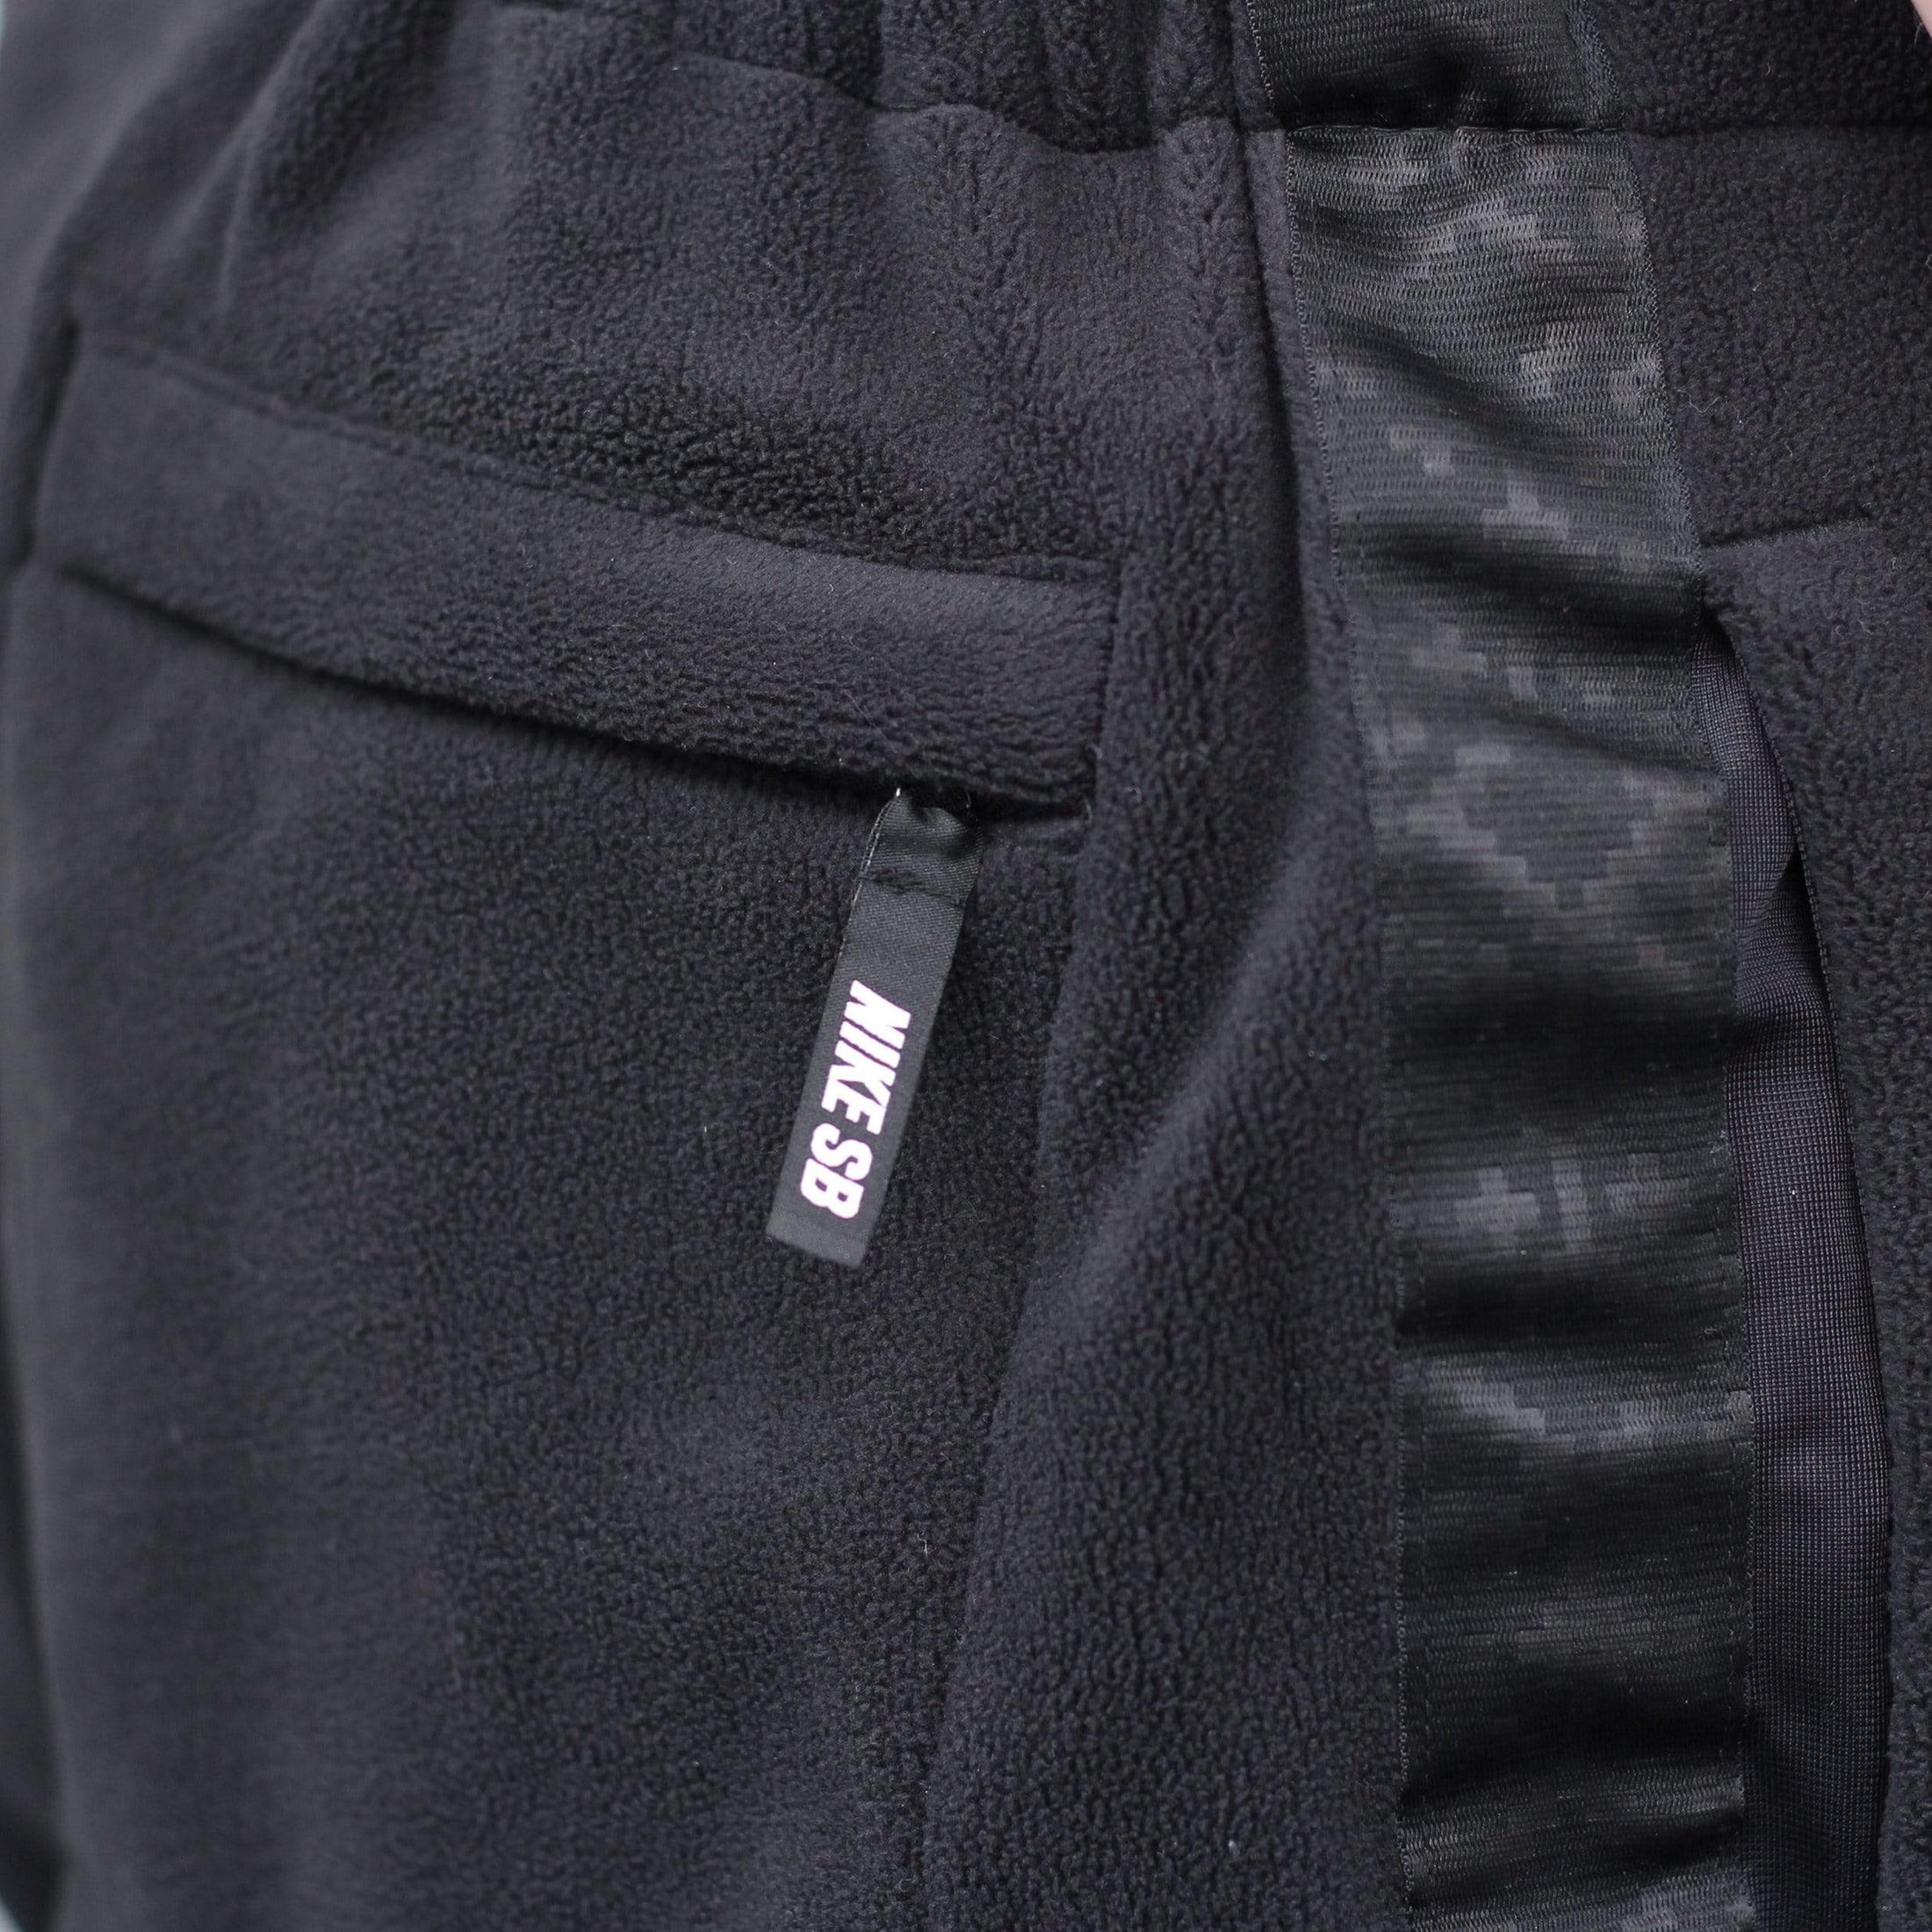 Nike SB Novelty Fleece Pant Black / White